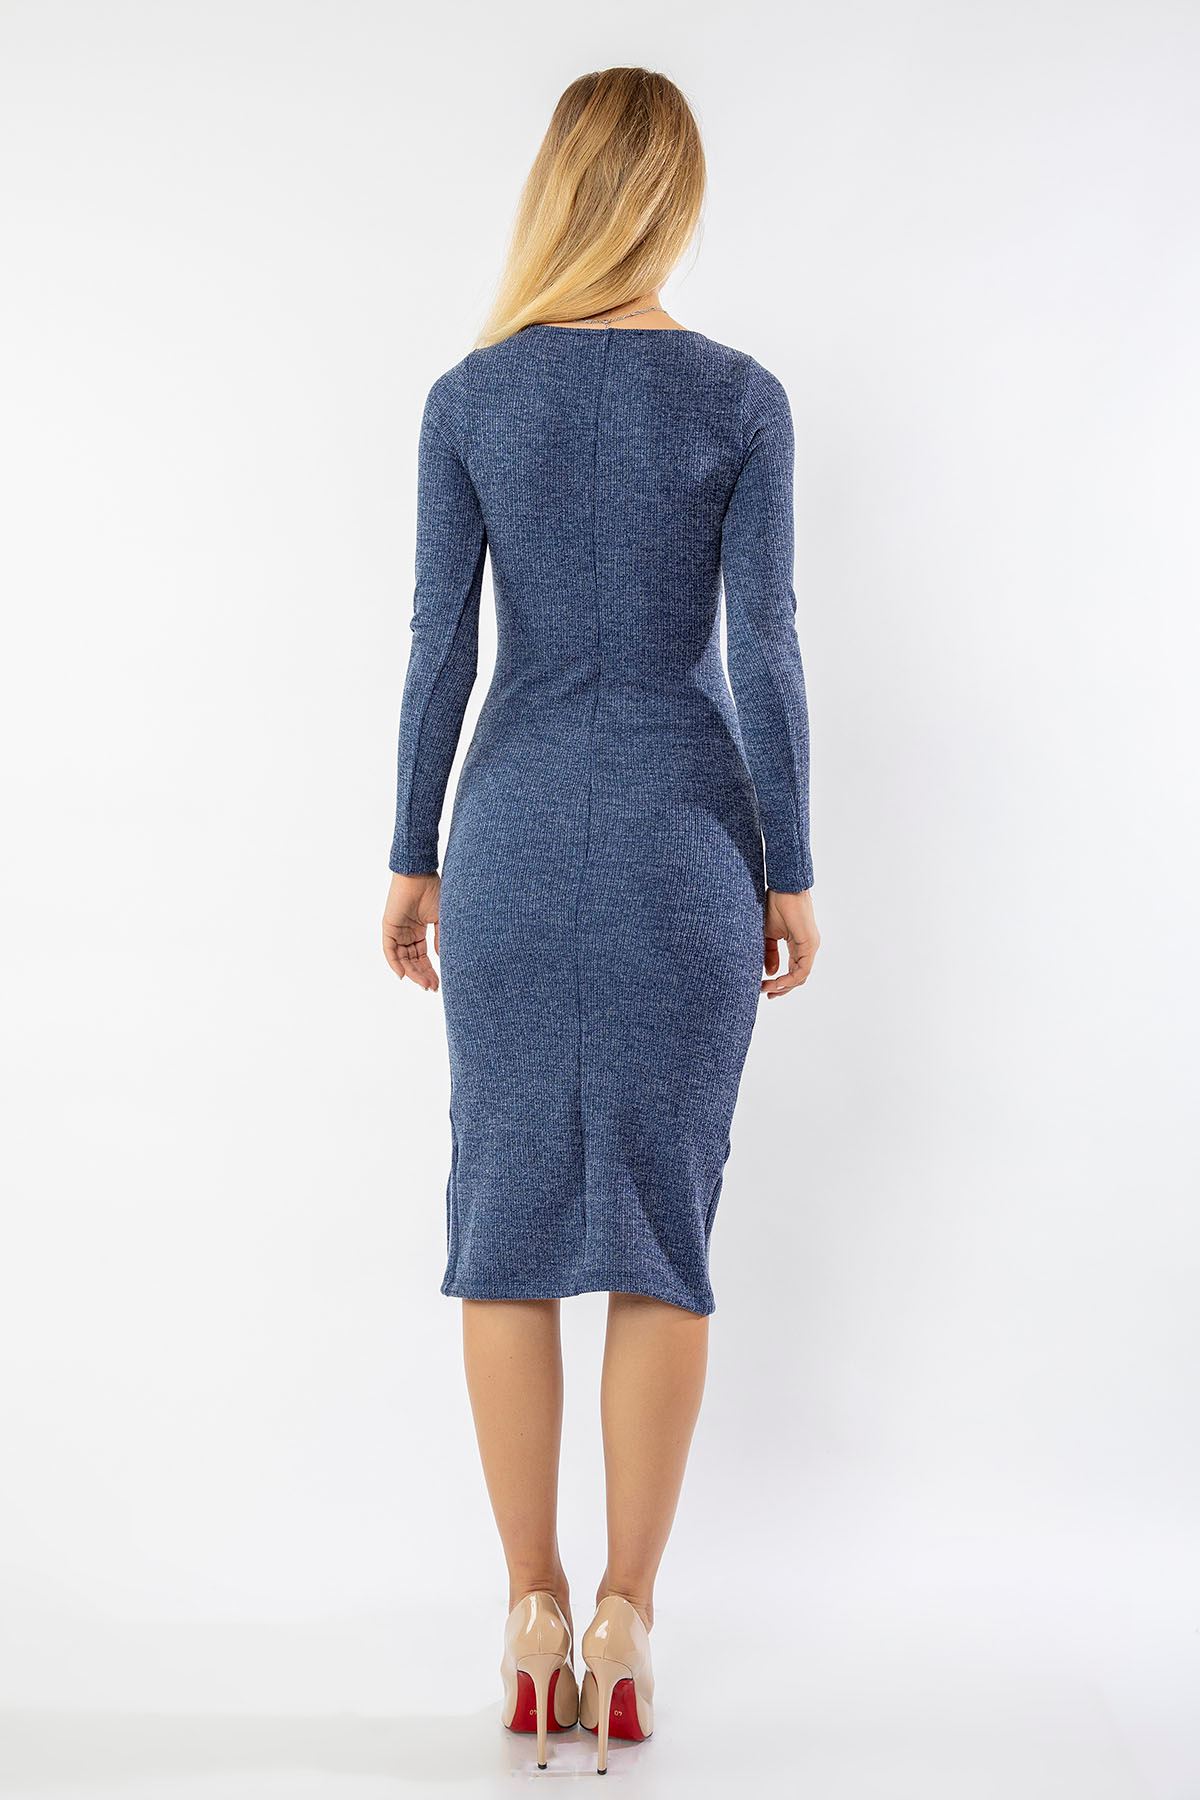 Knitwear Fabric Long Sleeve Midi Corset Women Dress - Navy Blue 